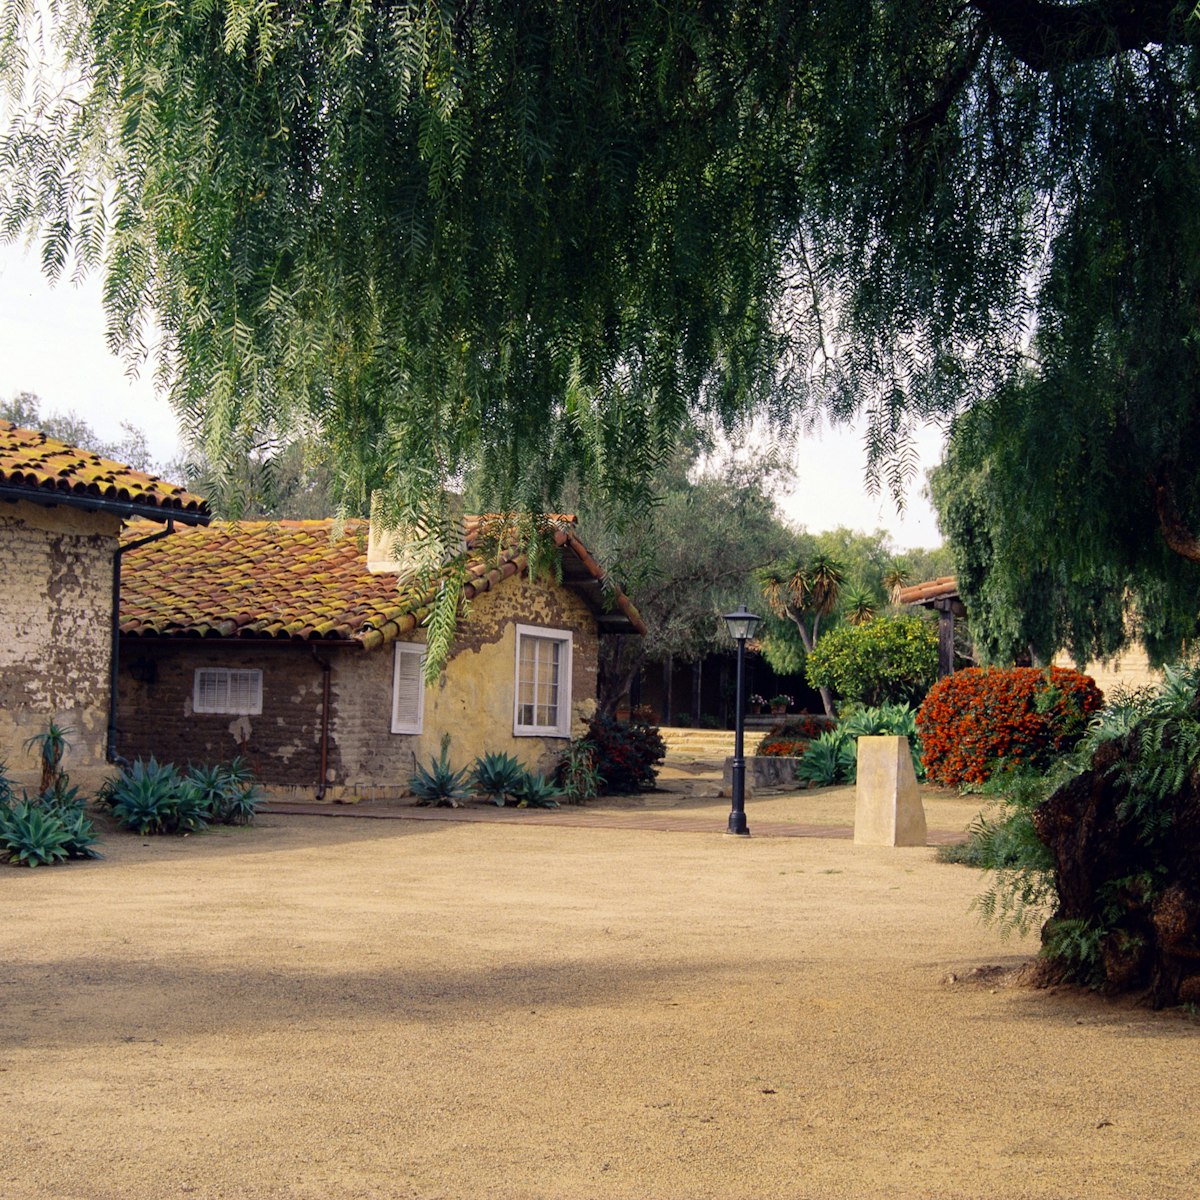 Courtyard of Santa Barbara Historical Society Museum - stock photo
